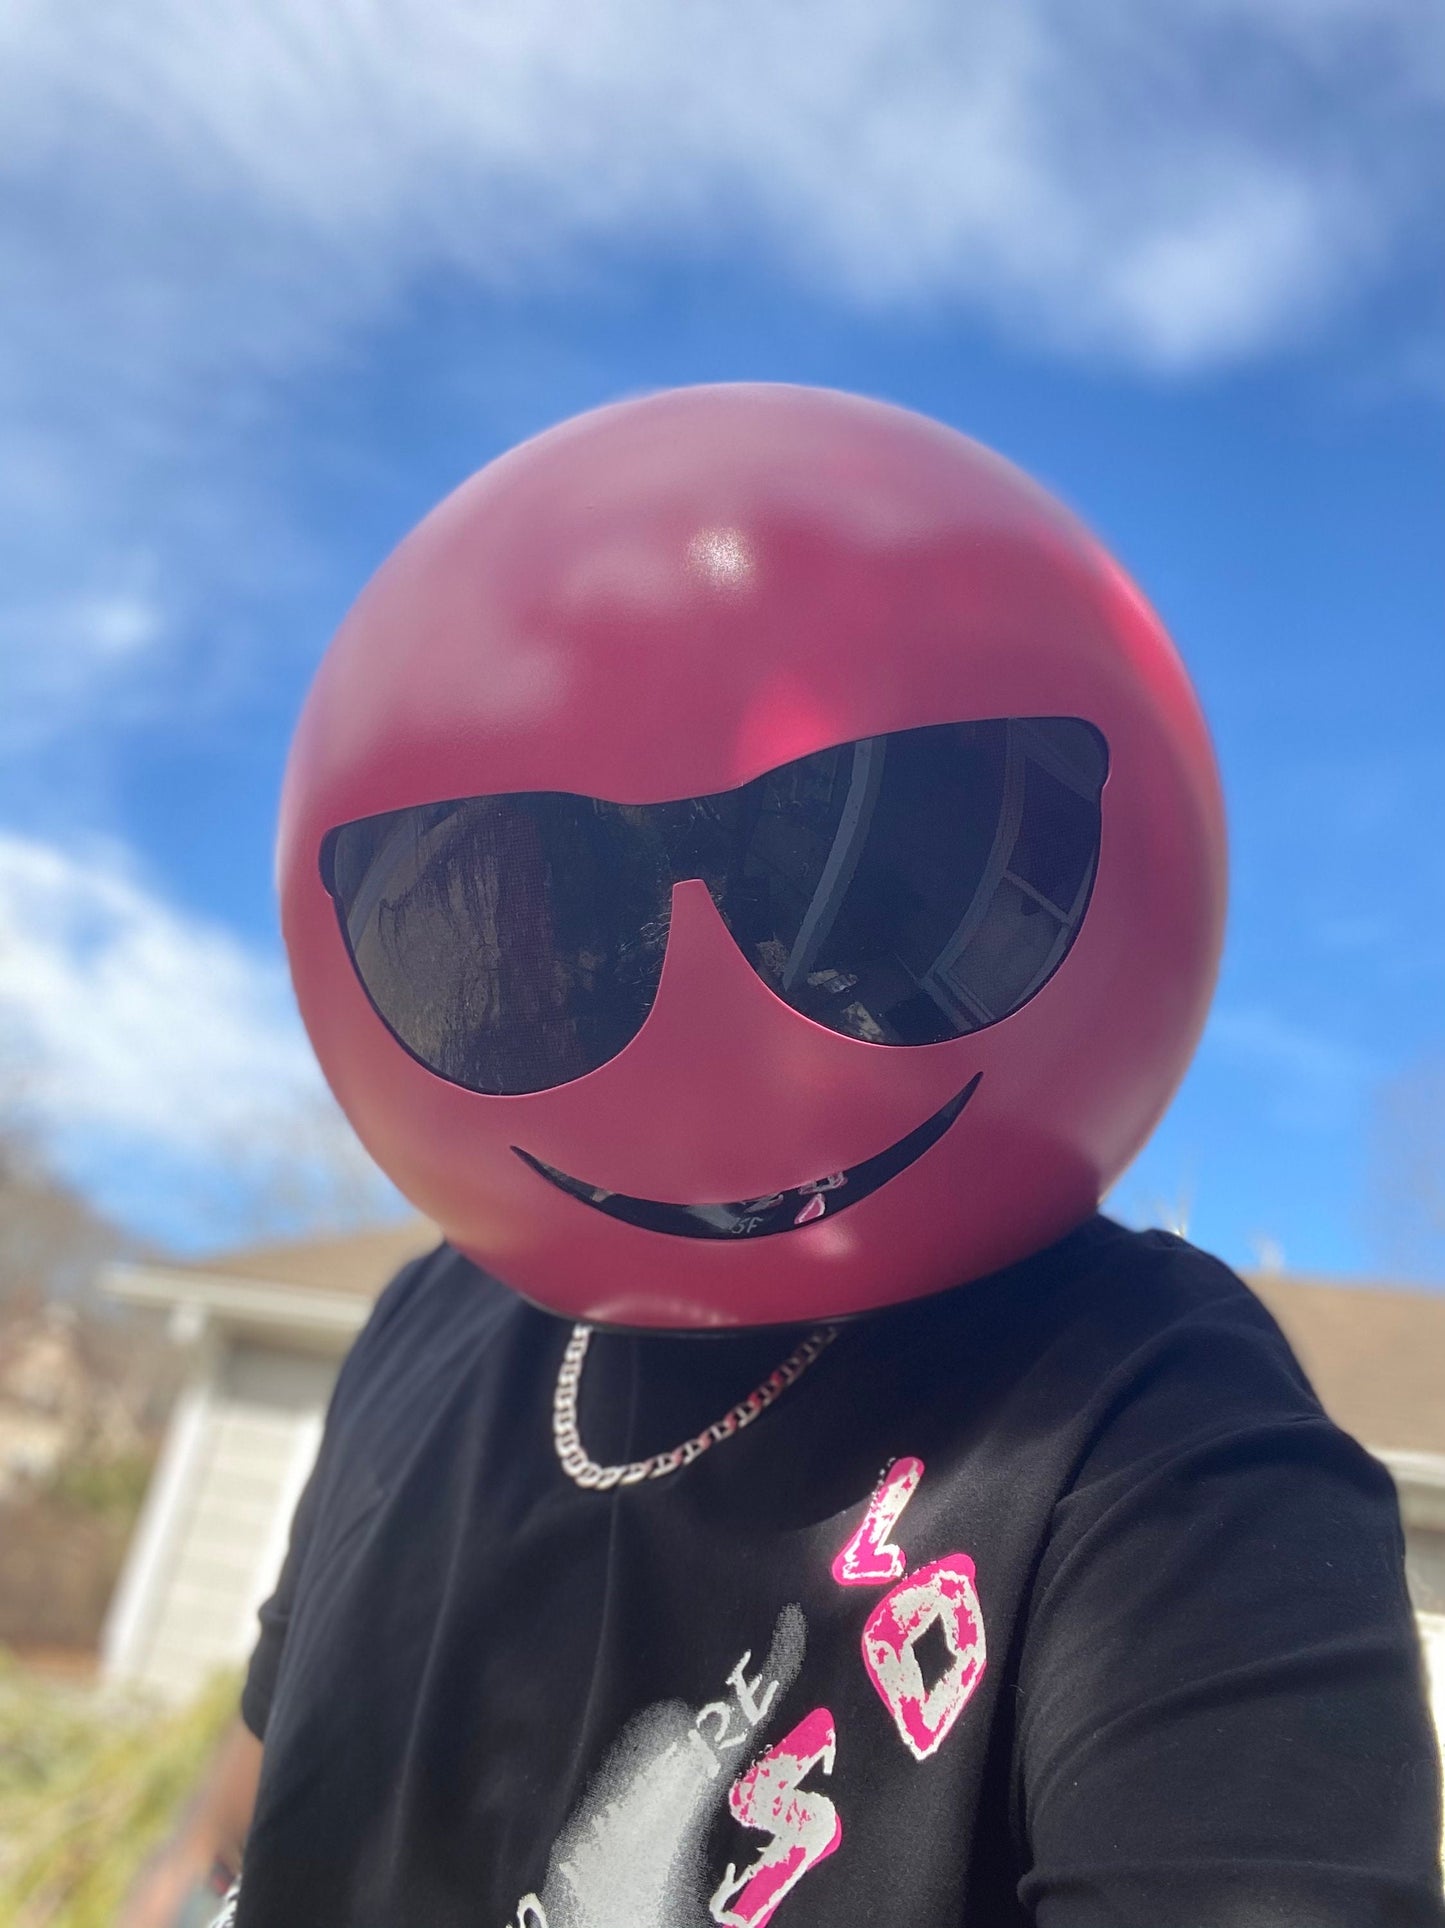 Custom sunglasses emoji helmet